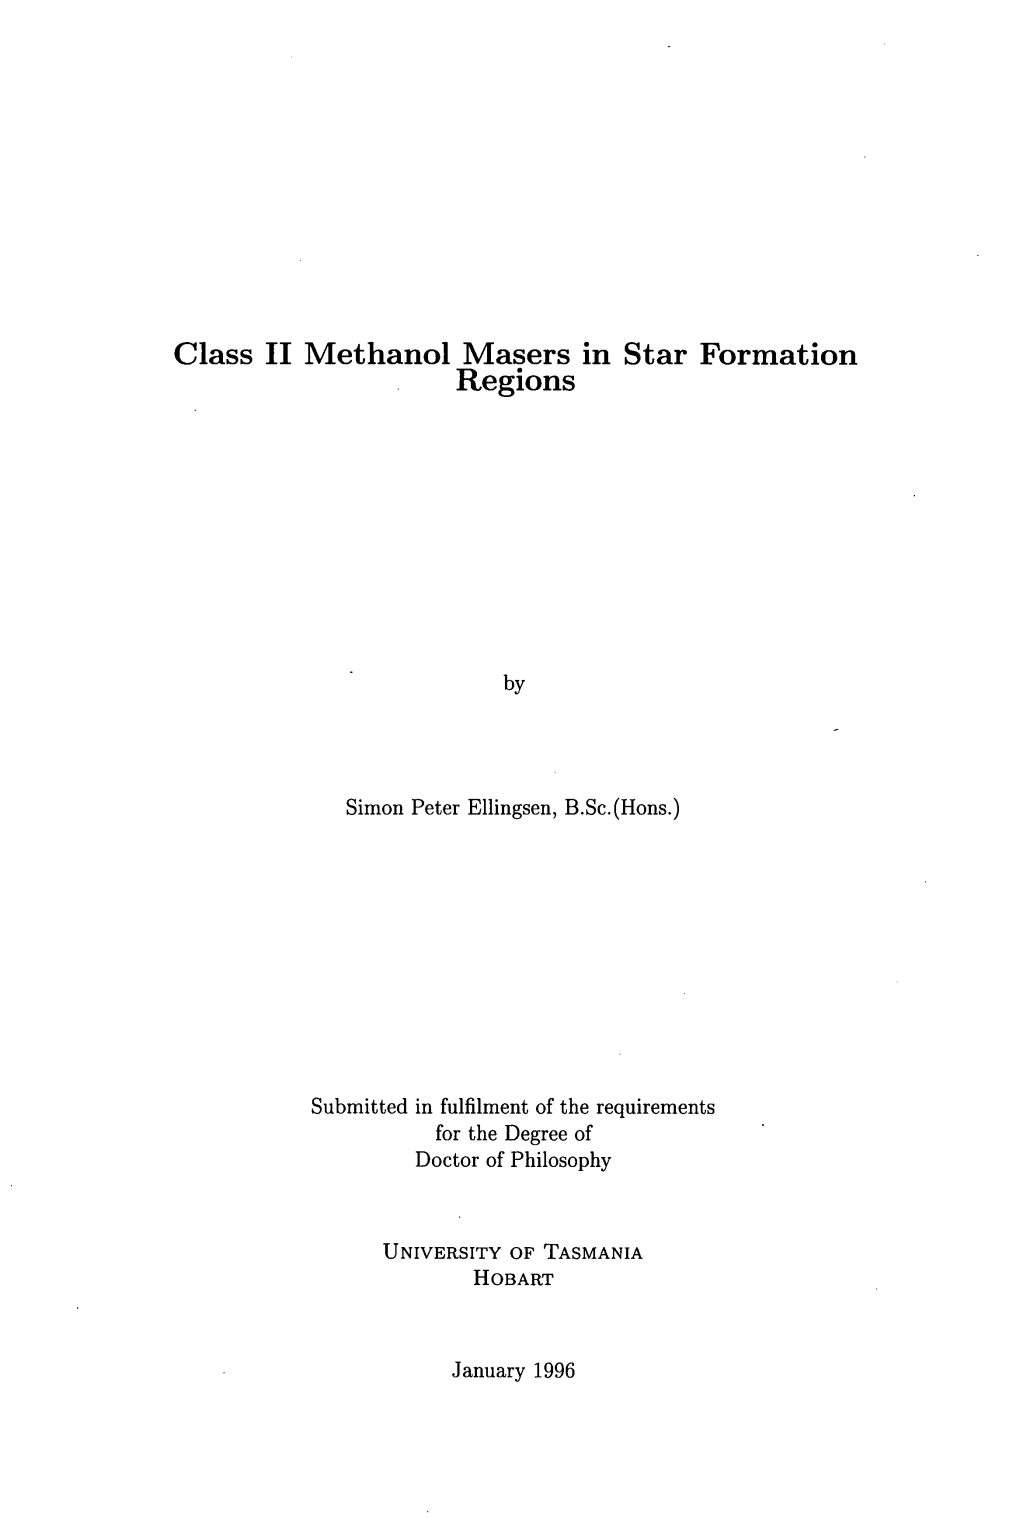 Class II Methanol Masers in Star Formation Regions